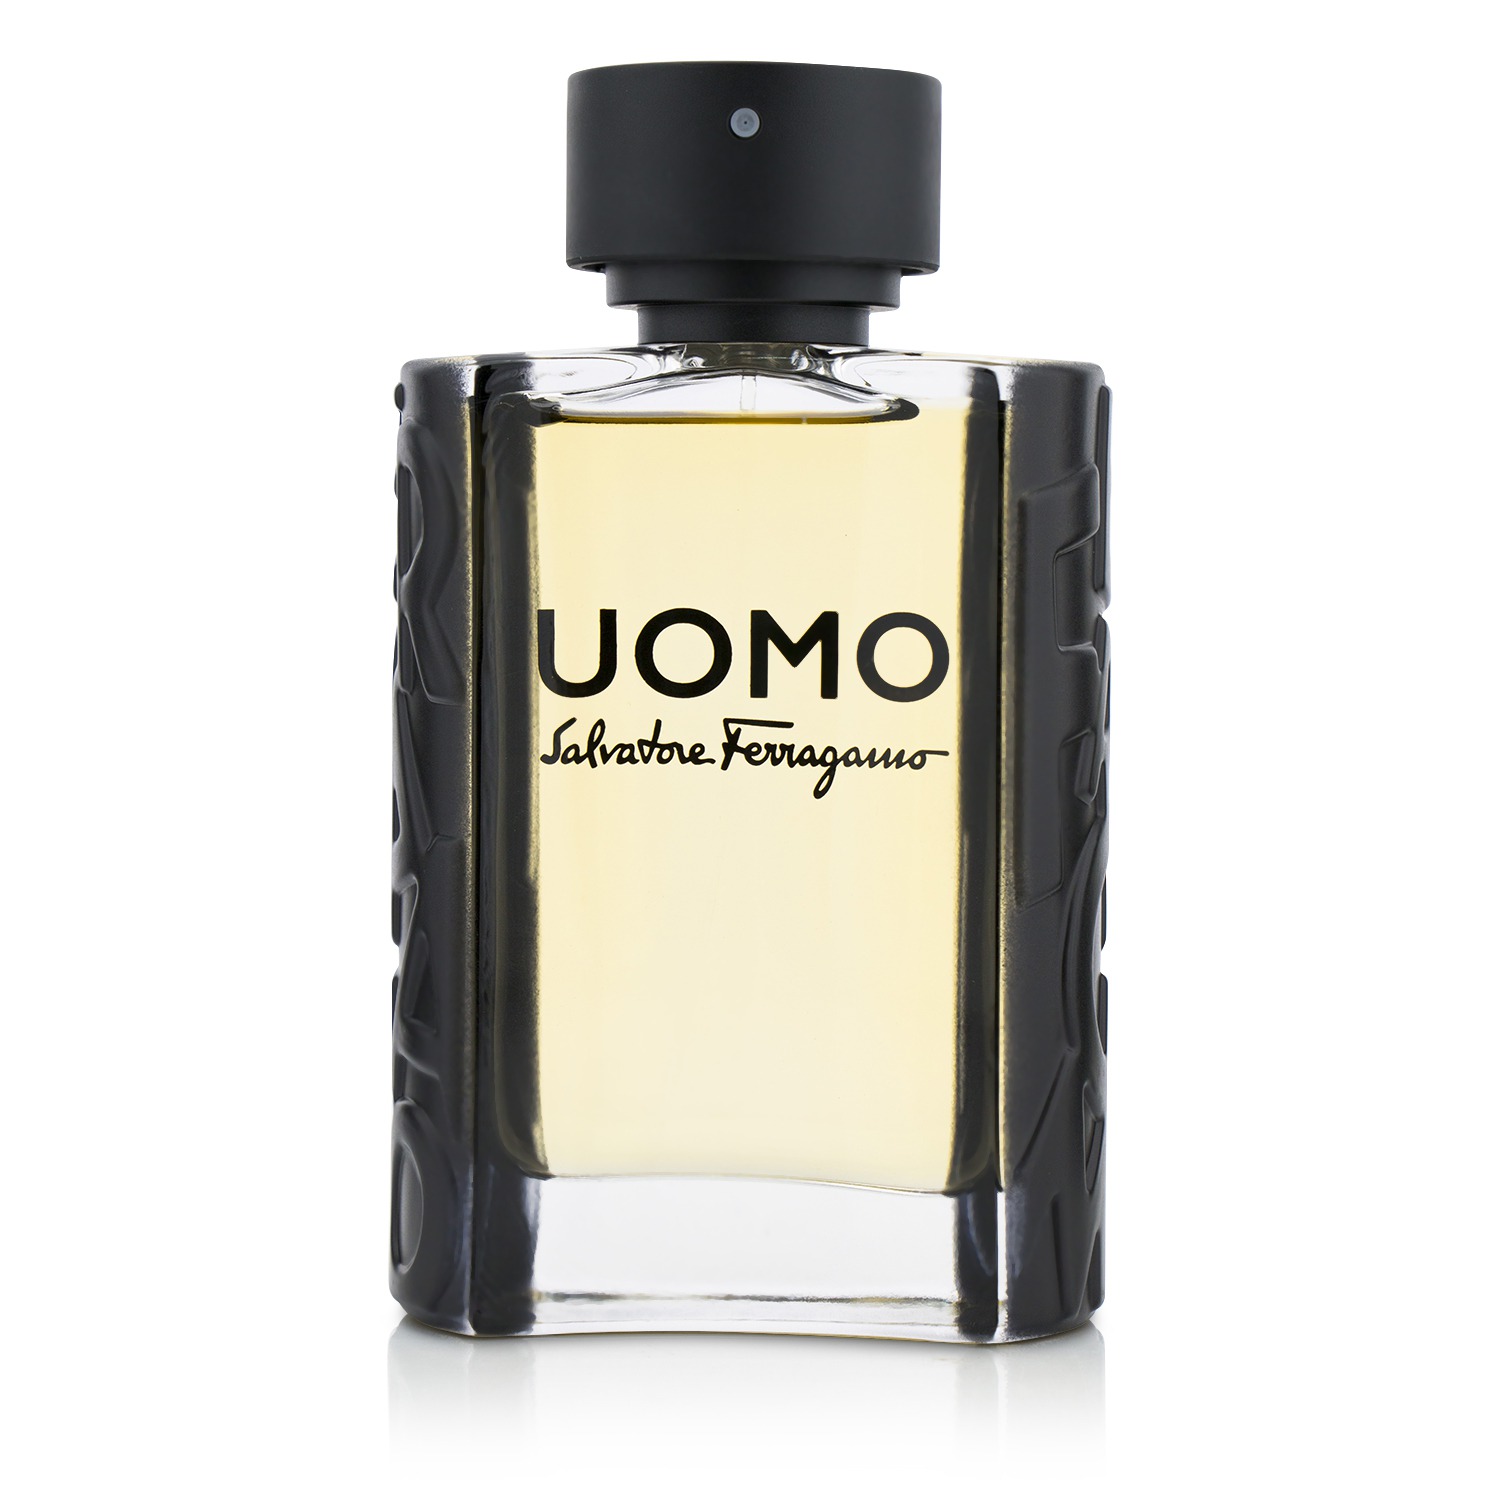 Salvatore Ferragamo Uomo EDT Spray 100ml Perfume for sale online | eBay